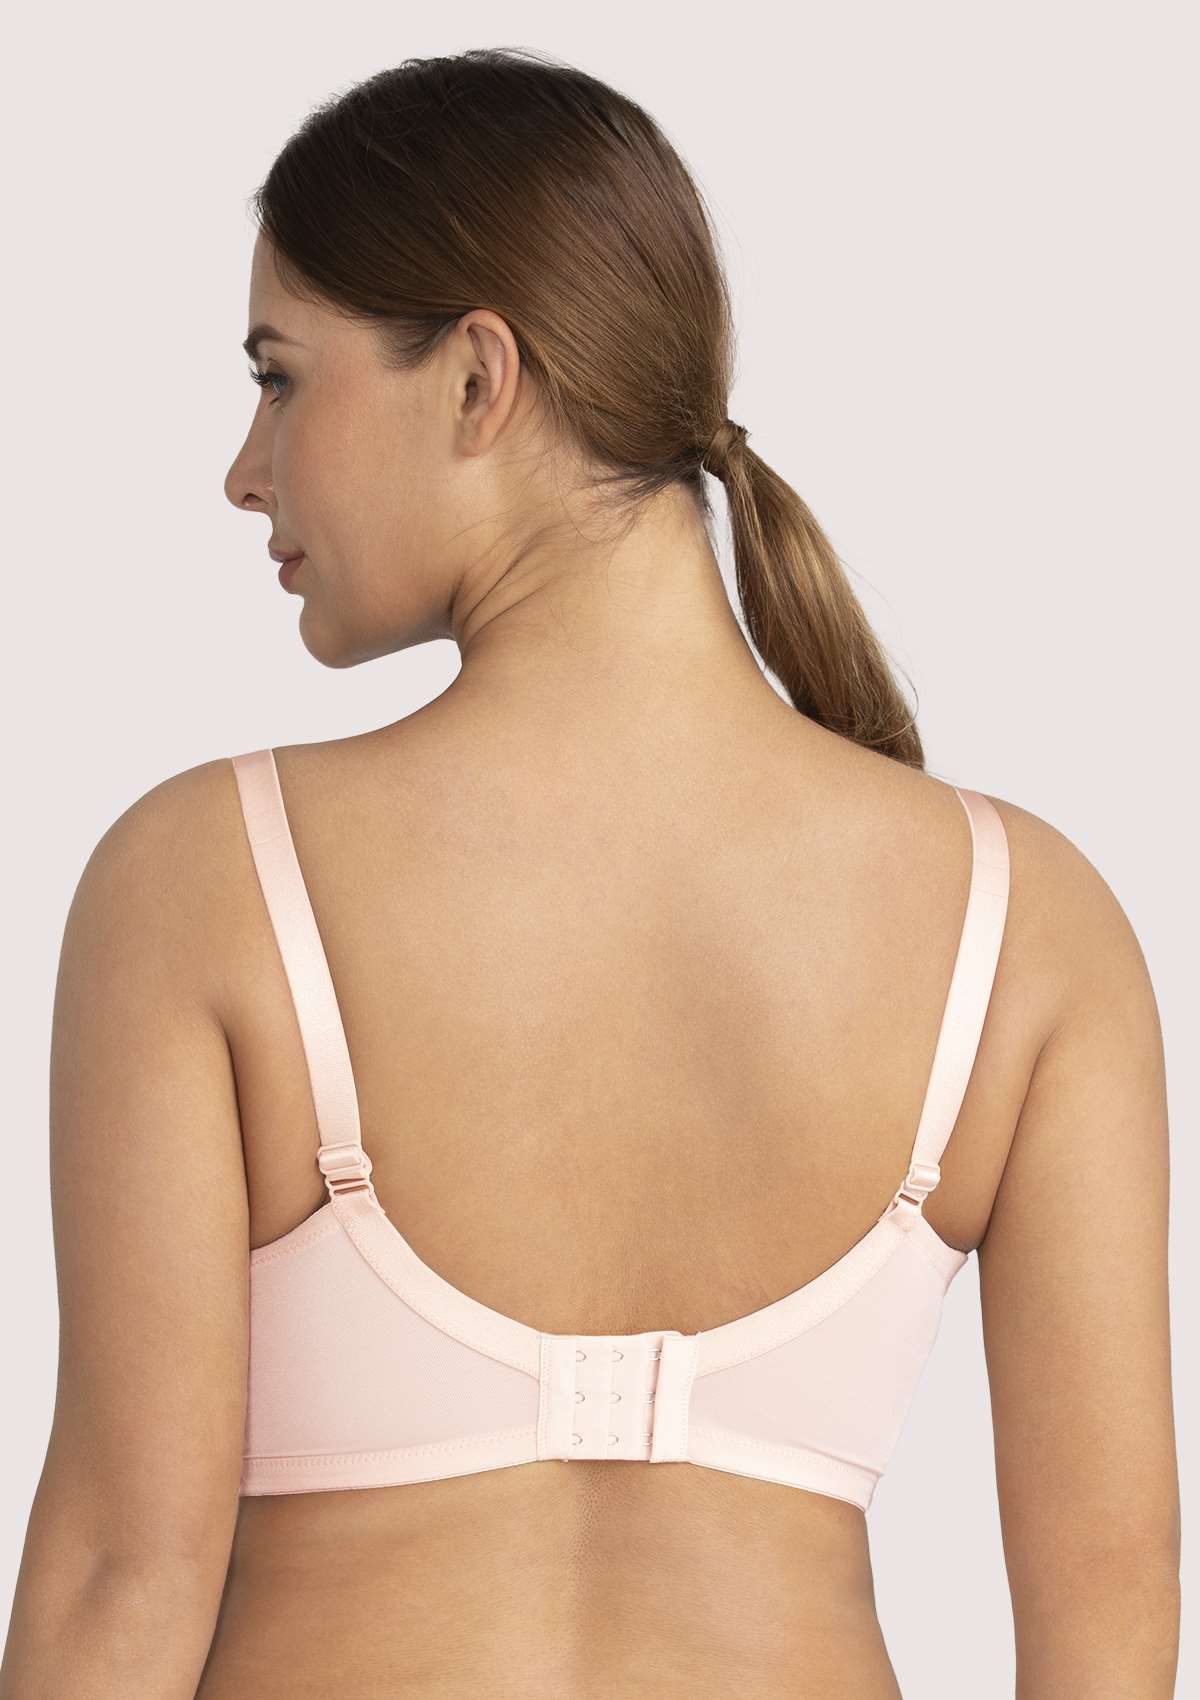 HSIA Sunflower Matching Bra And Panties Set: Comfortable Plus Size Bra - Pink / 40 / G